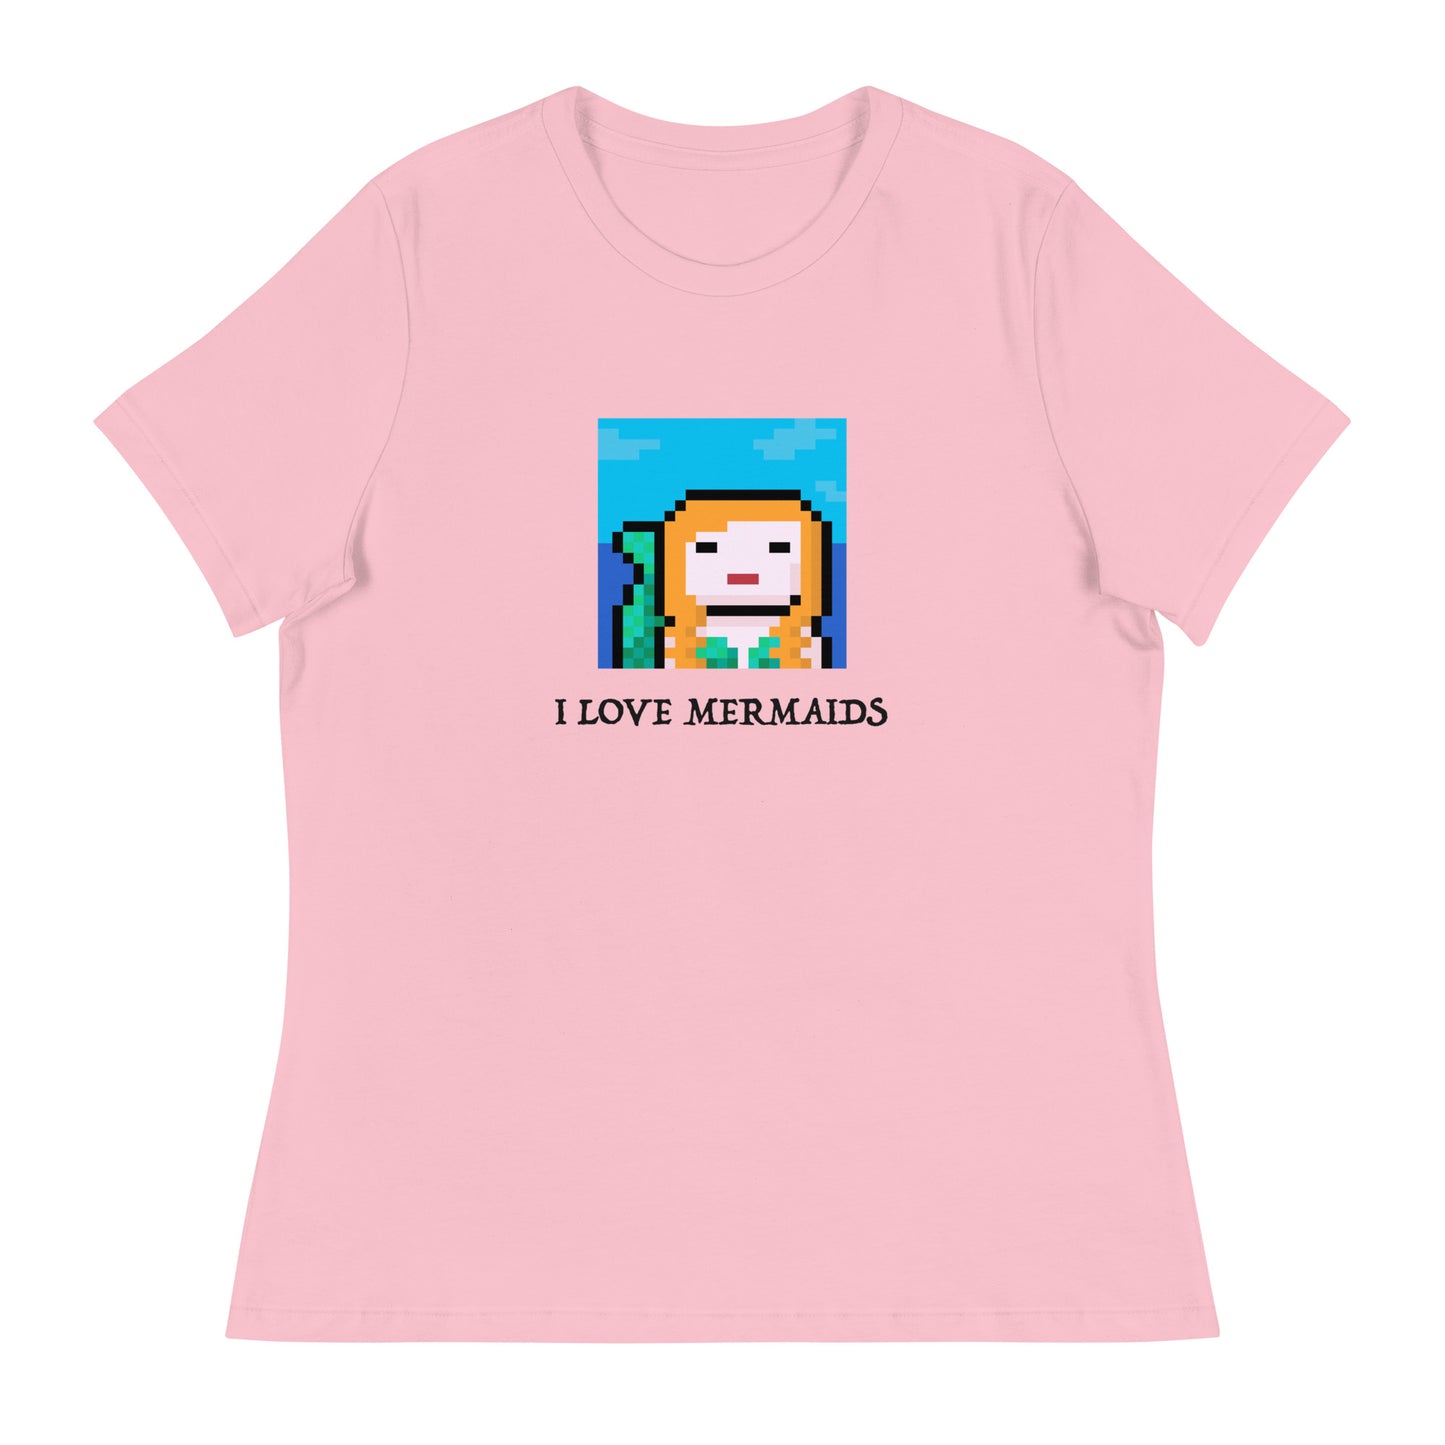 I Love Mermaids - Women's Relaxed T-Shirt